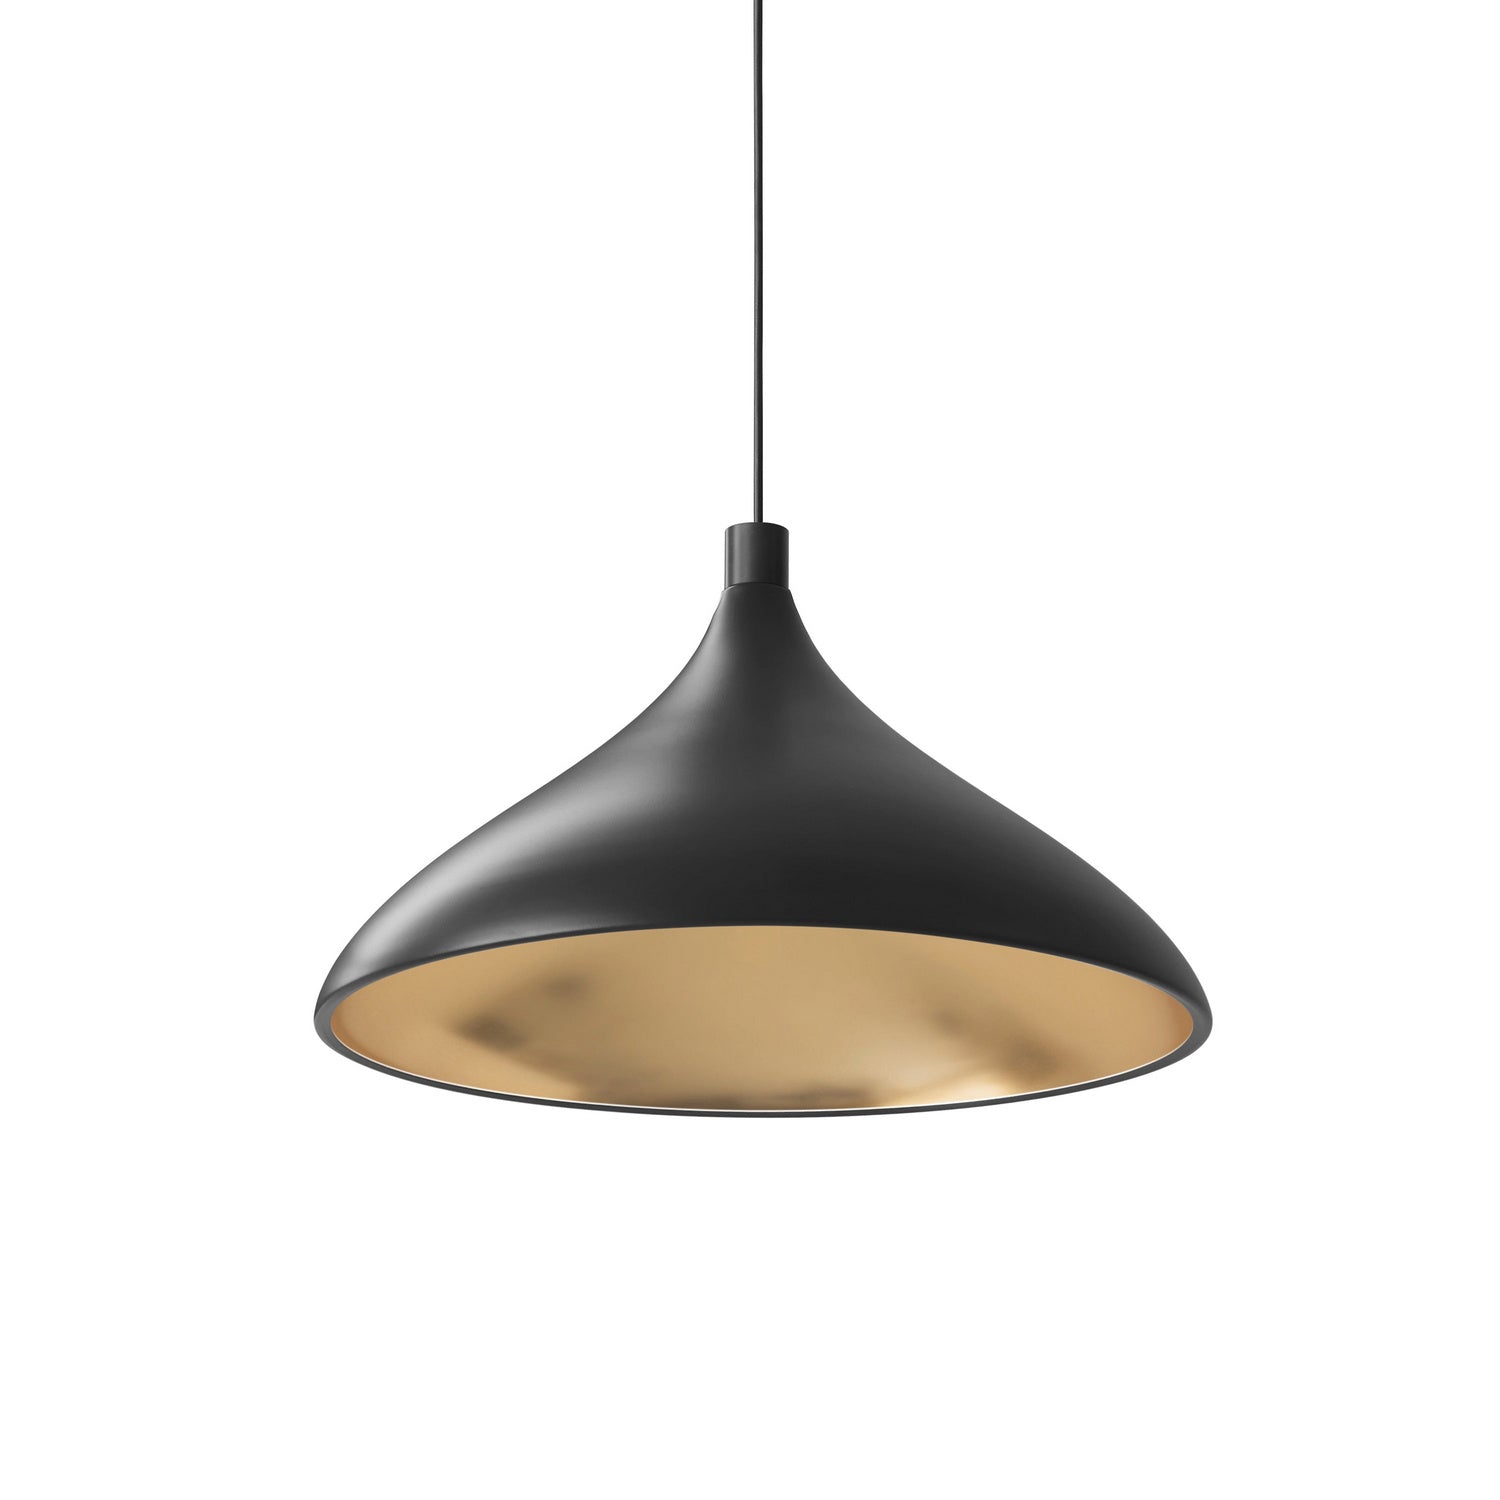 Pablo Designs - LED Pendant - Black/ Brass- Union Lighting Luminaires Decor